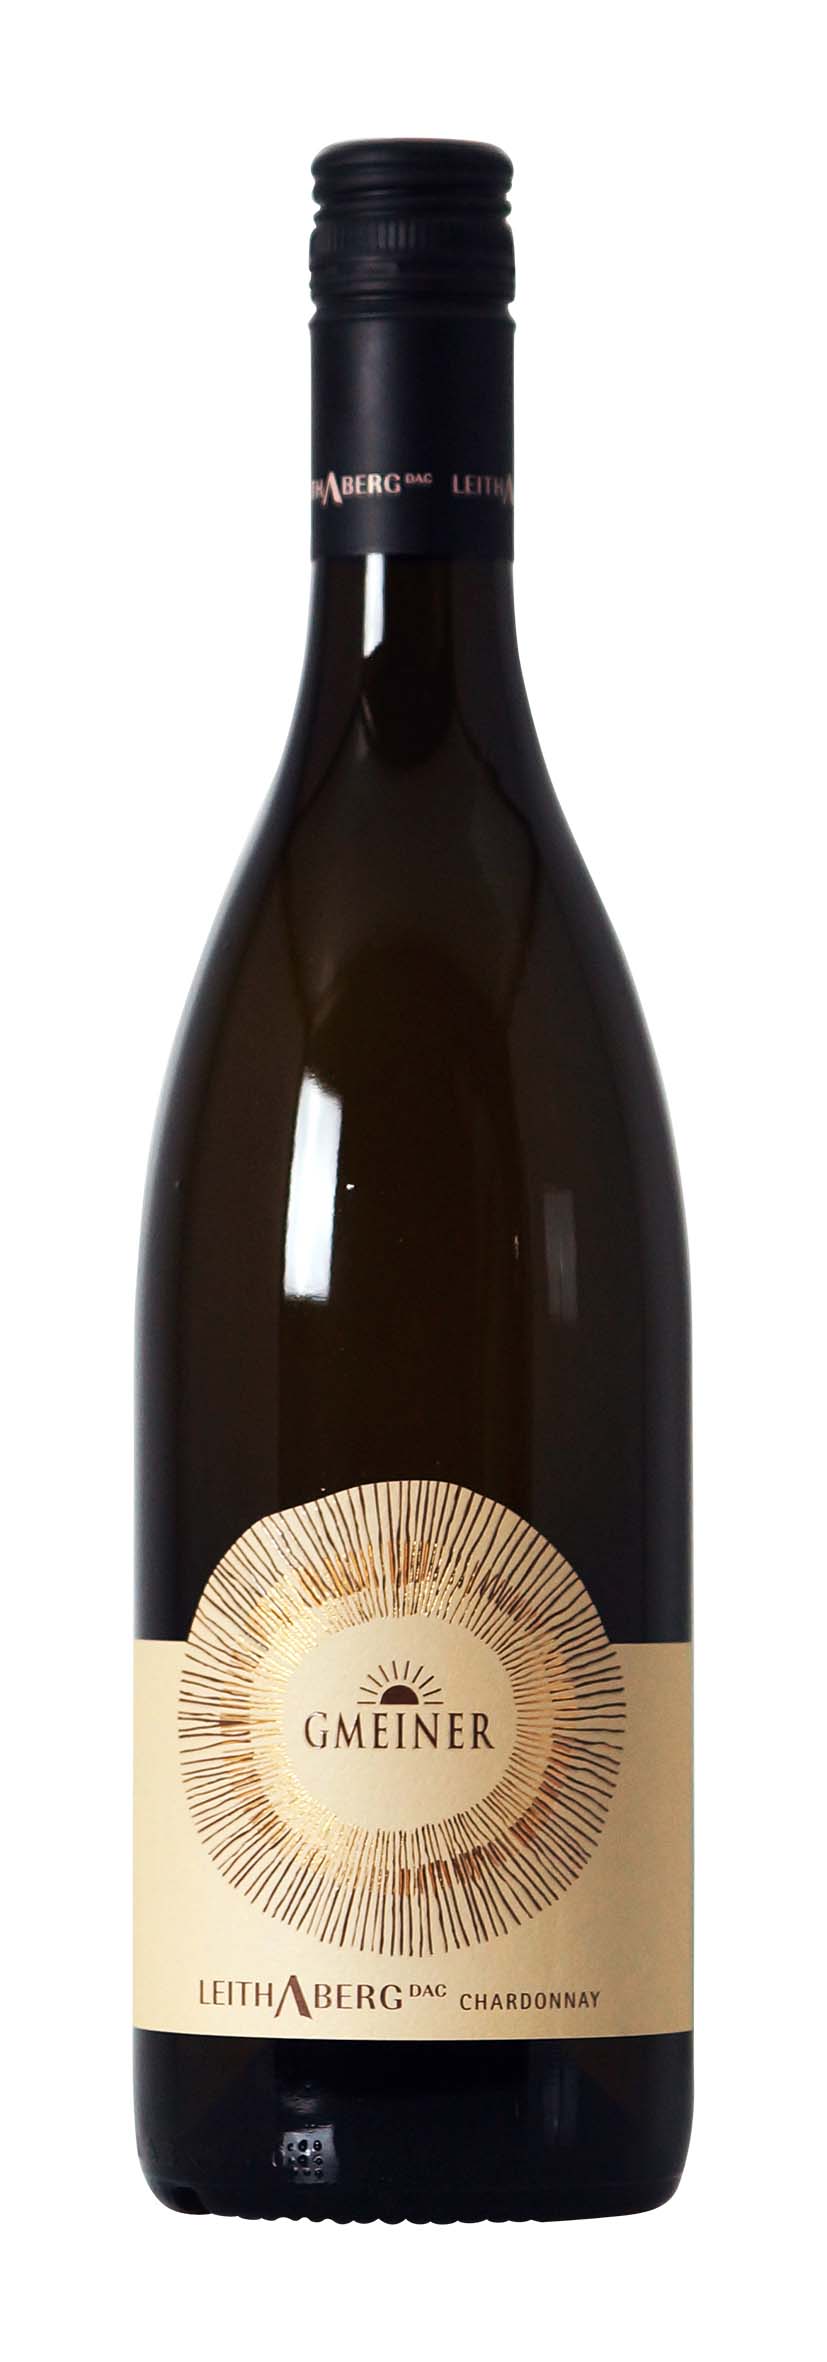 Leithaberg DAC Chardonnay 2013